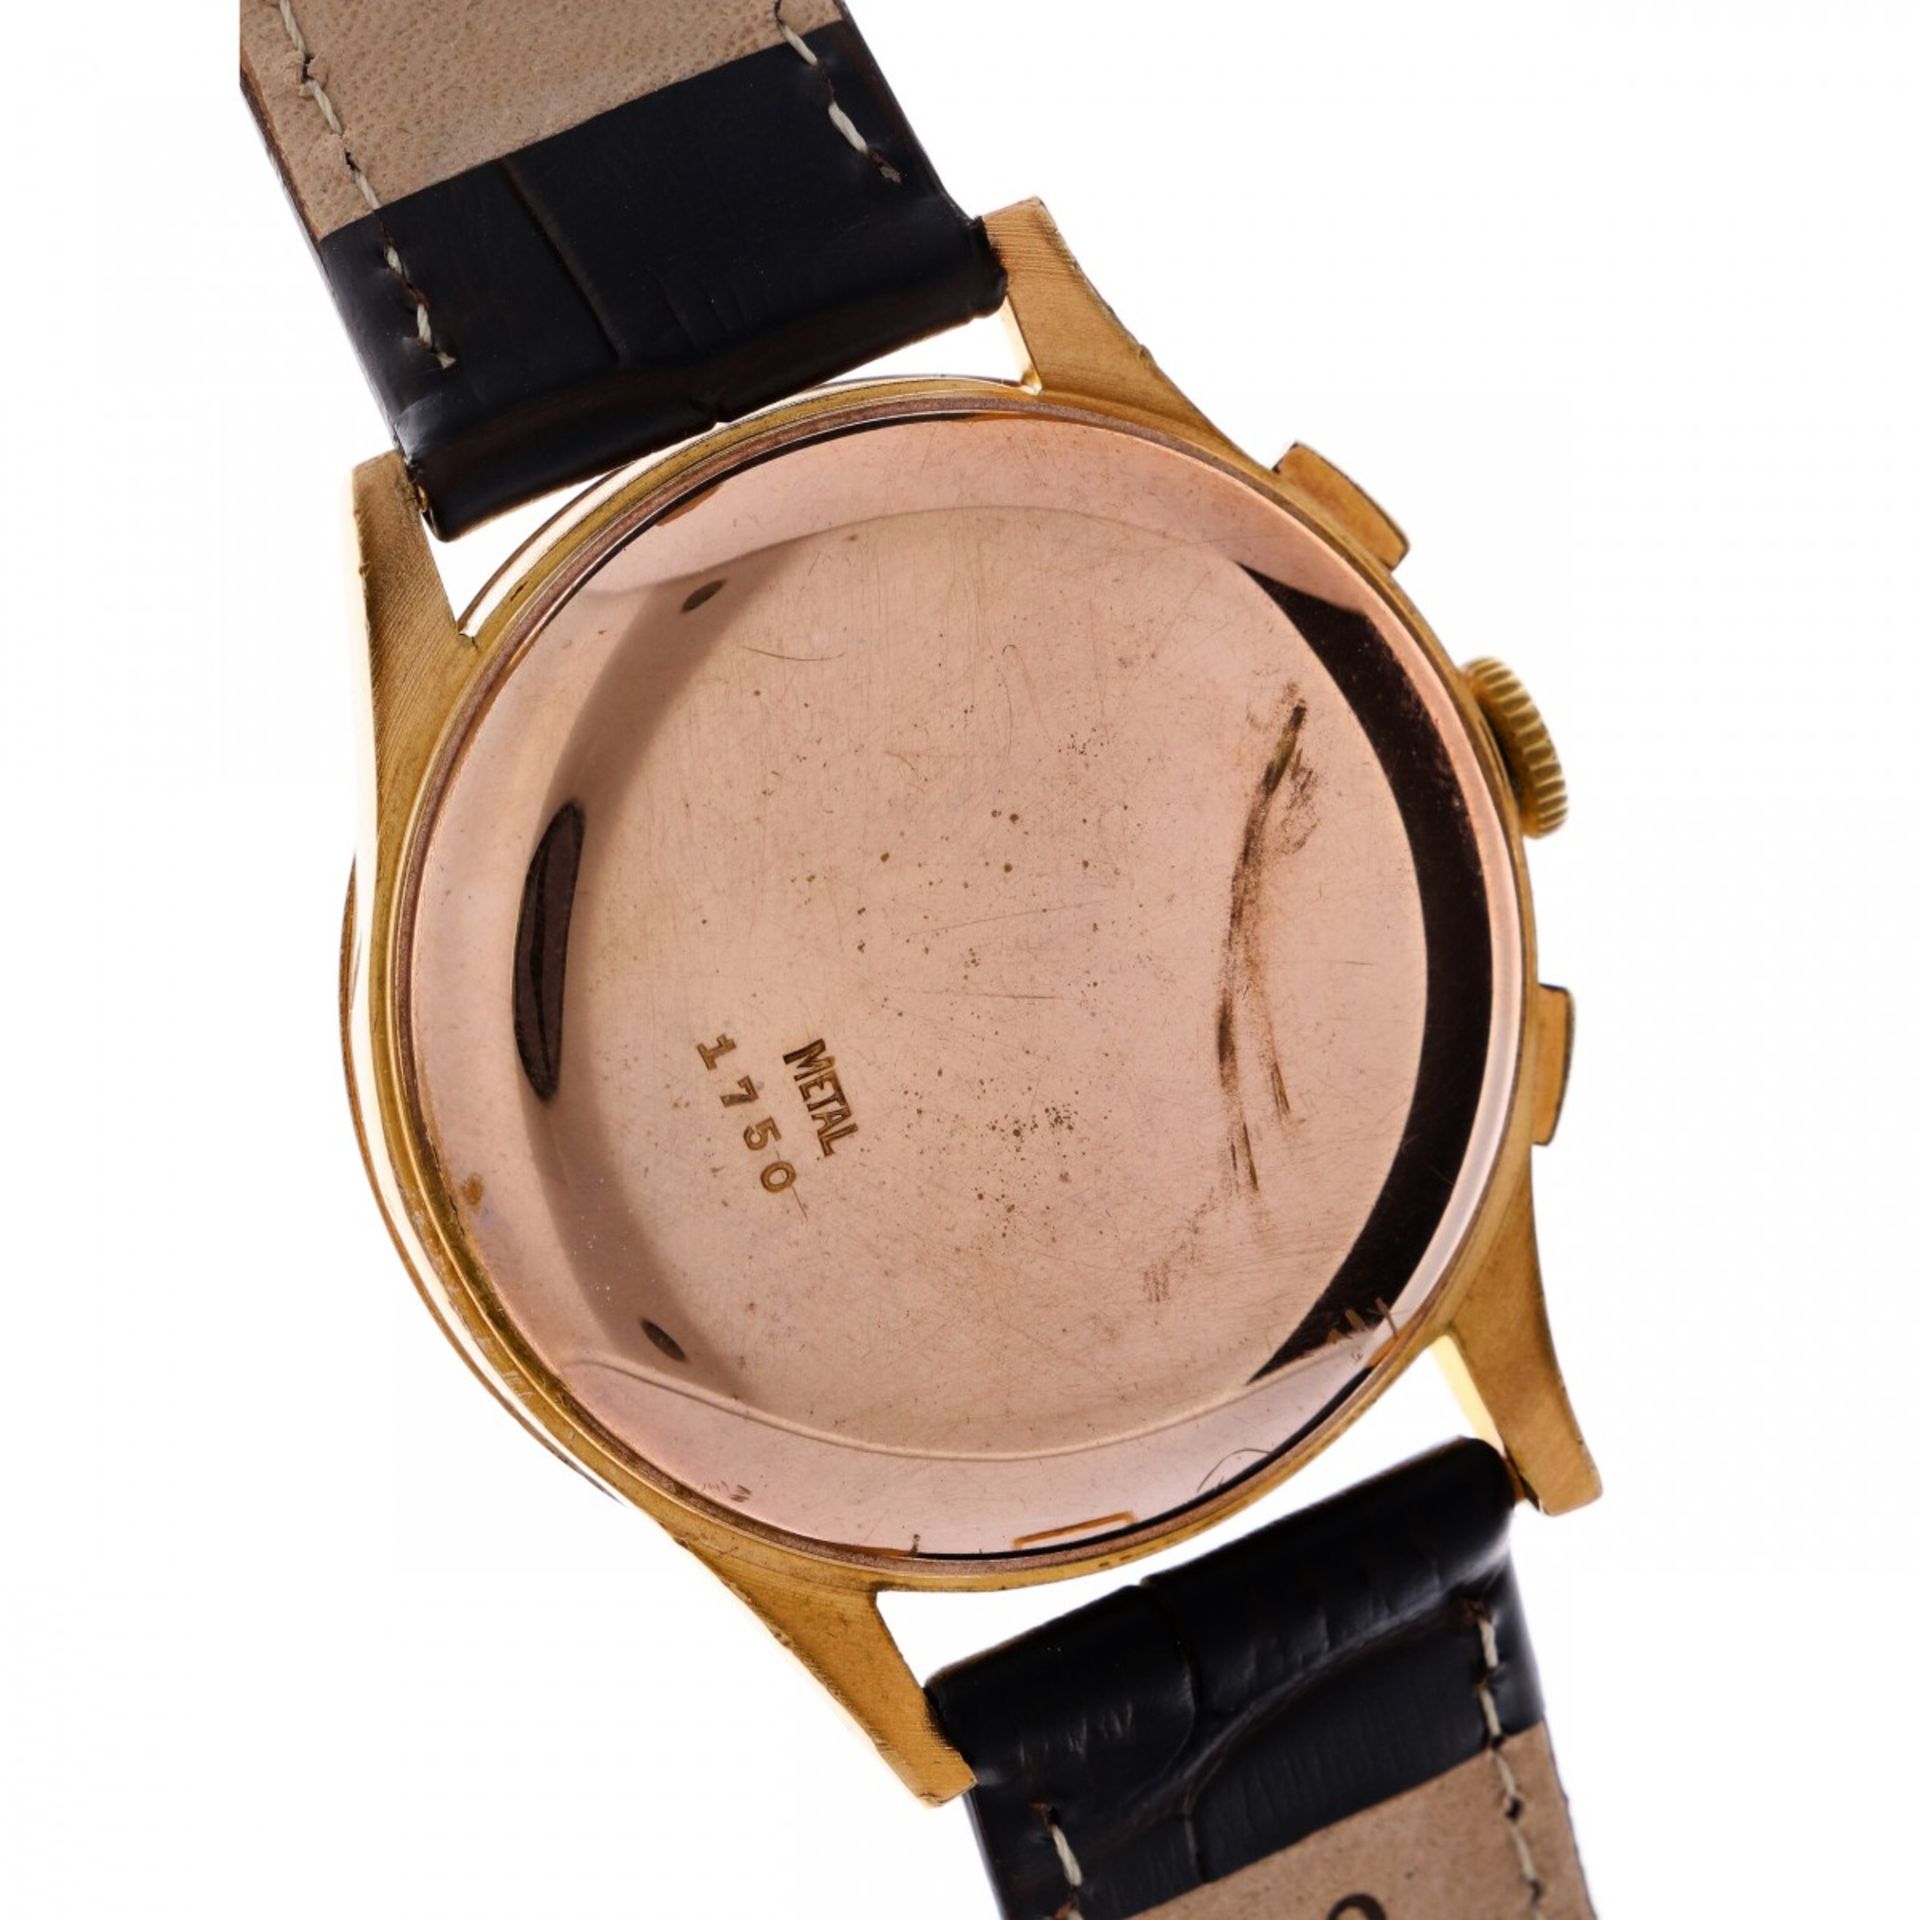 Baume & Mercier Chronograph Rose gold - Men's watch - ca. 1945 - Image 7 of 9